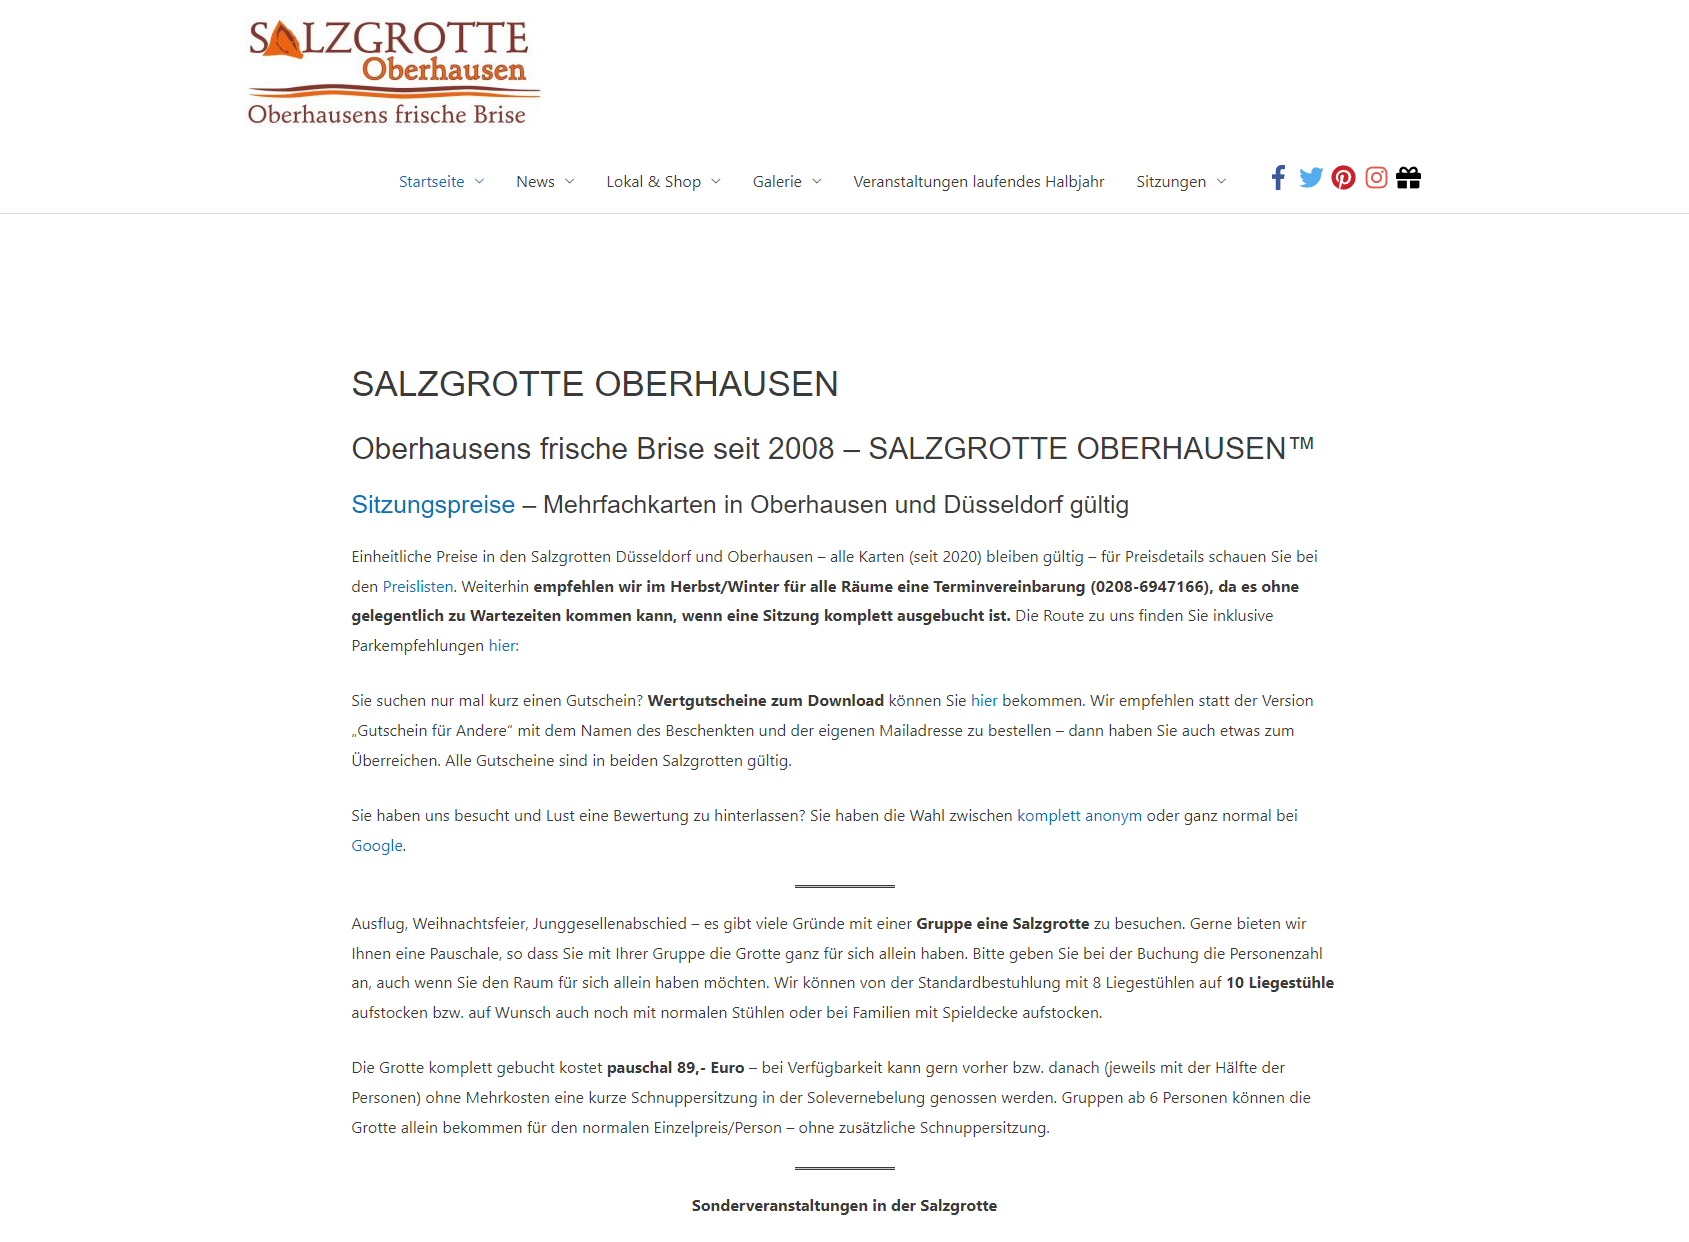 Salzgrotte Oberhausen